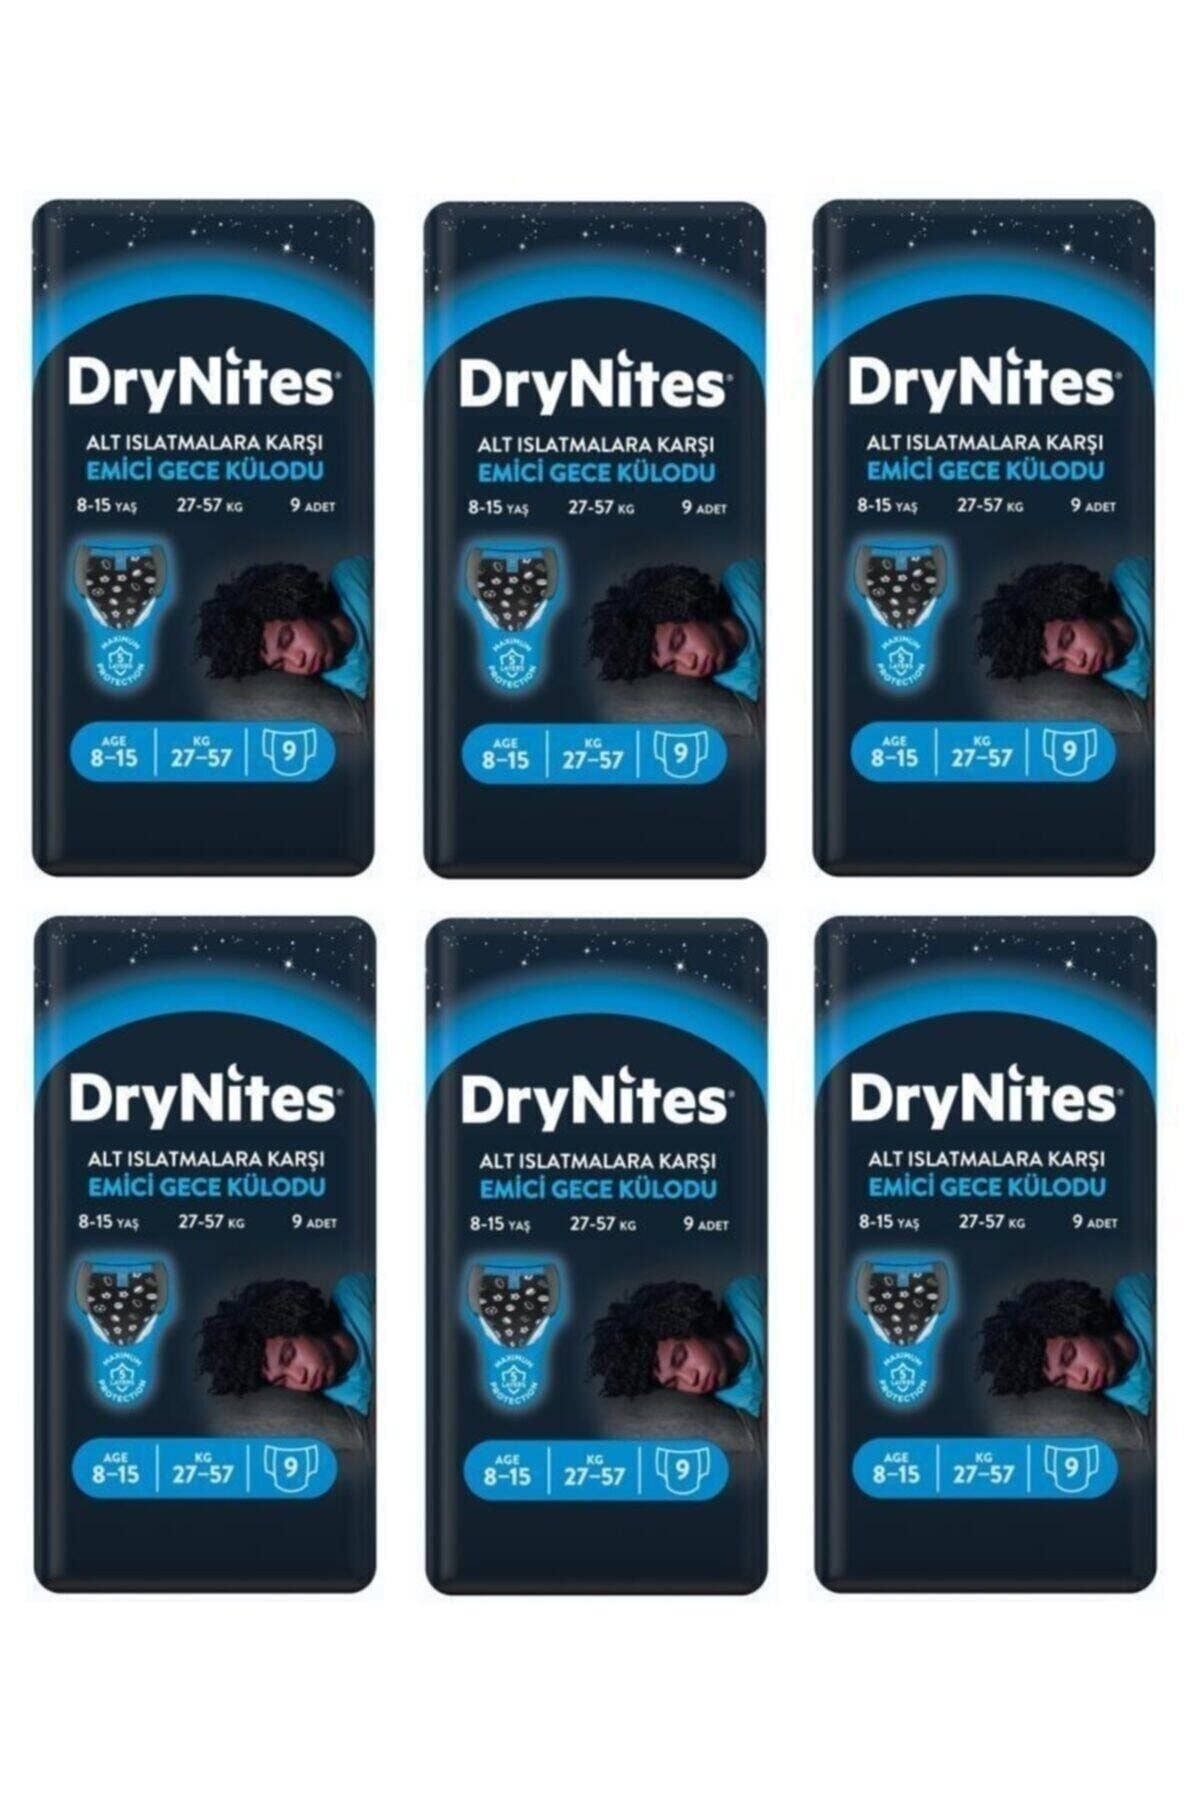 DryNites Erkek Emici Gece Külodu 8-15 Yaş 27-57 Kg 54 Ad